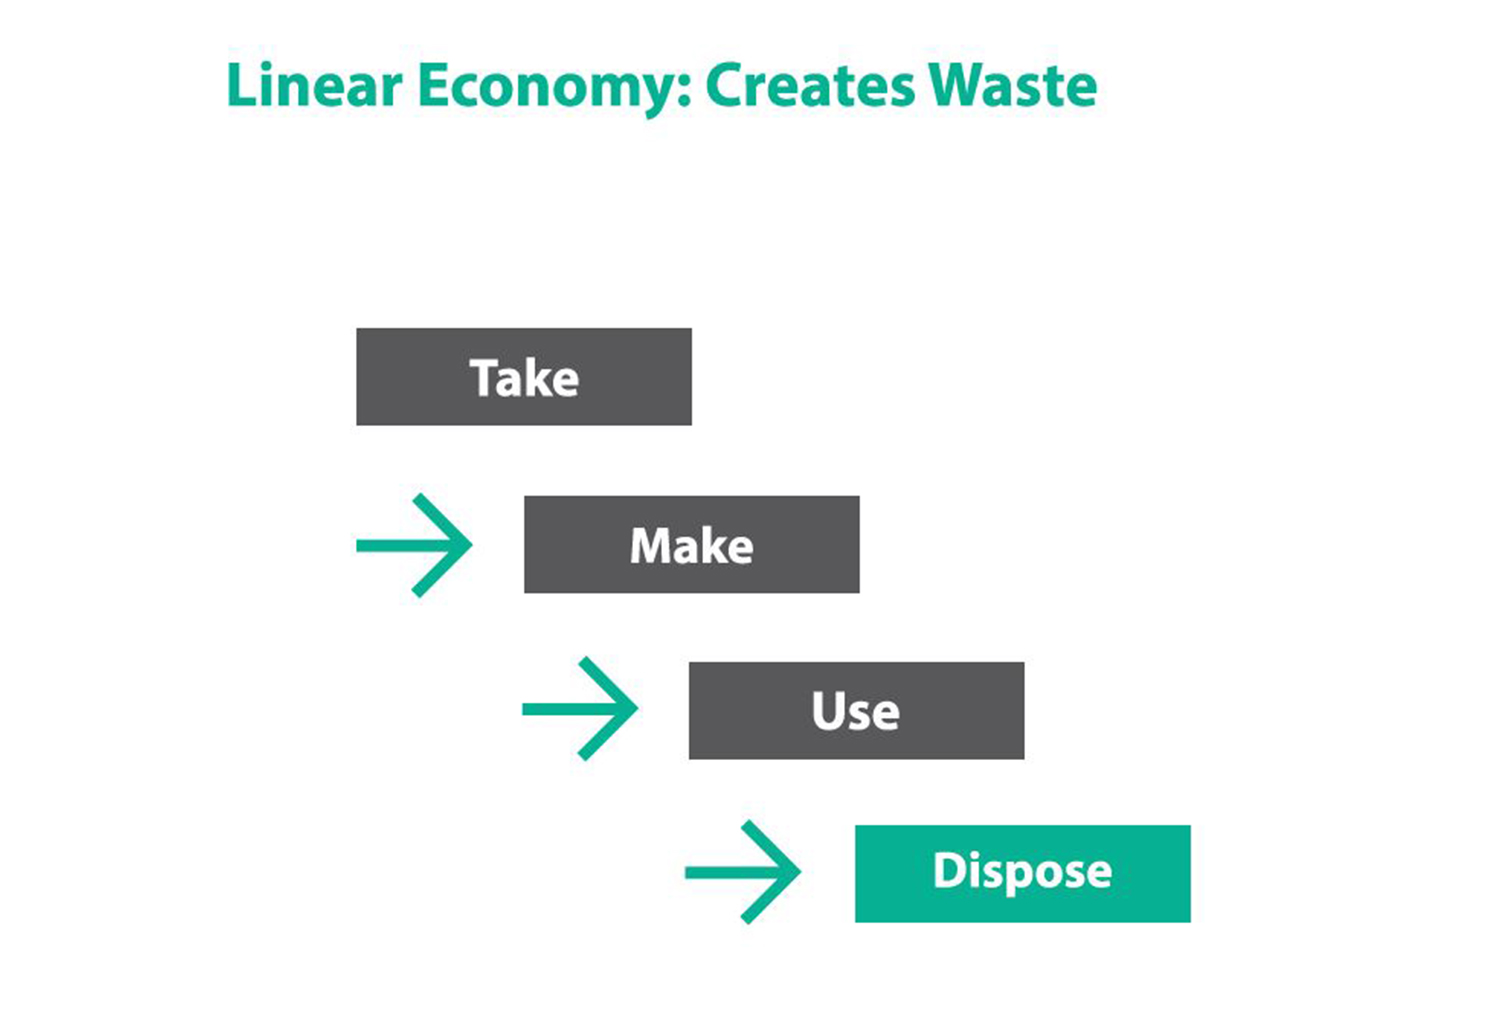 Image of Linear Economy, showing make, take, use, dispose